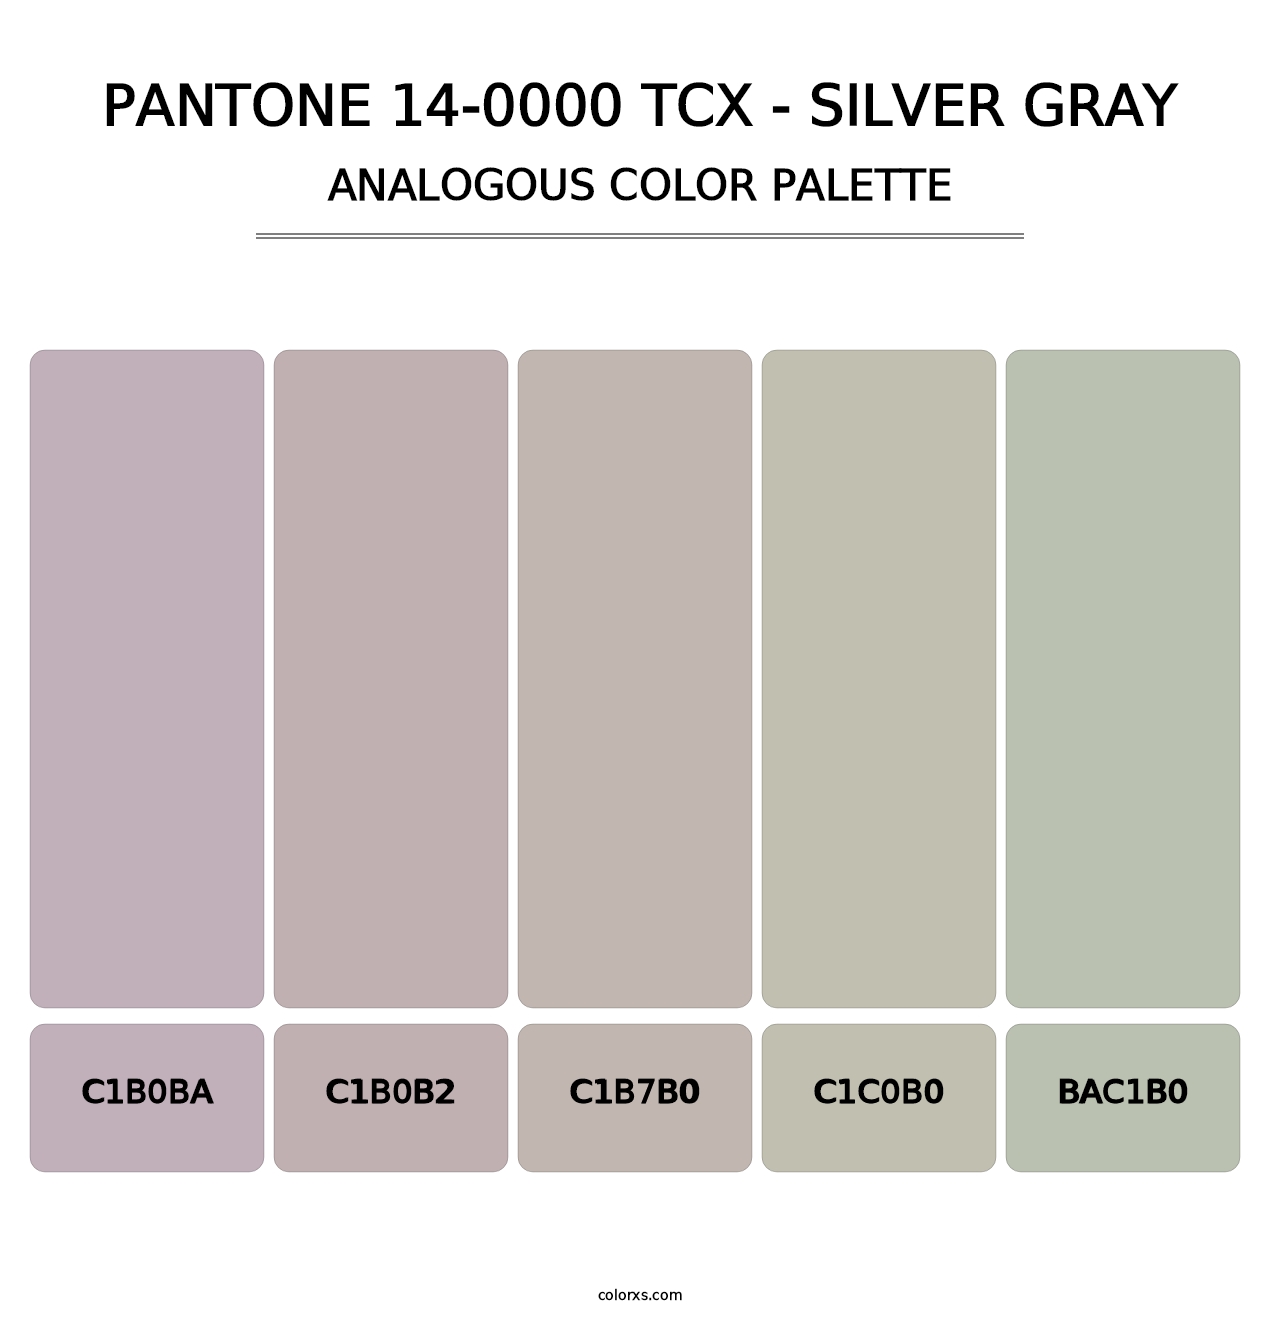 PANTONE 14-0000 TCX - Silver Gray - Analogous Color Palette